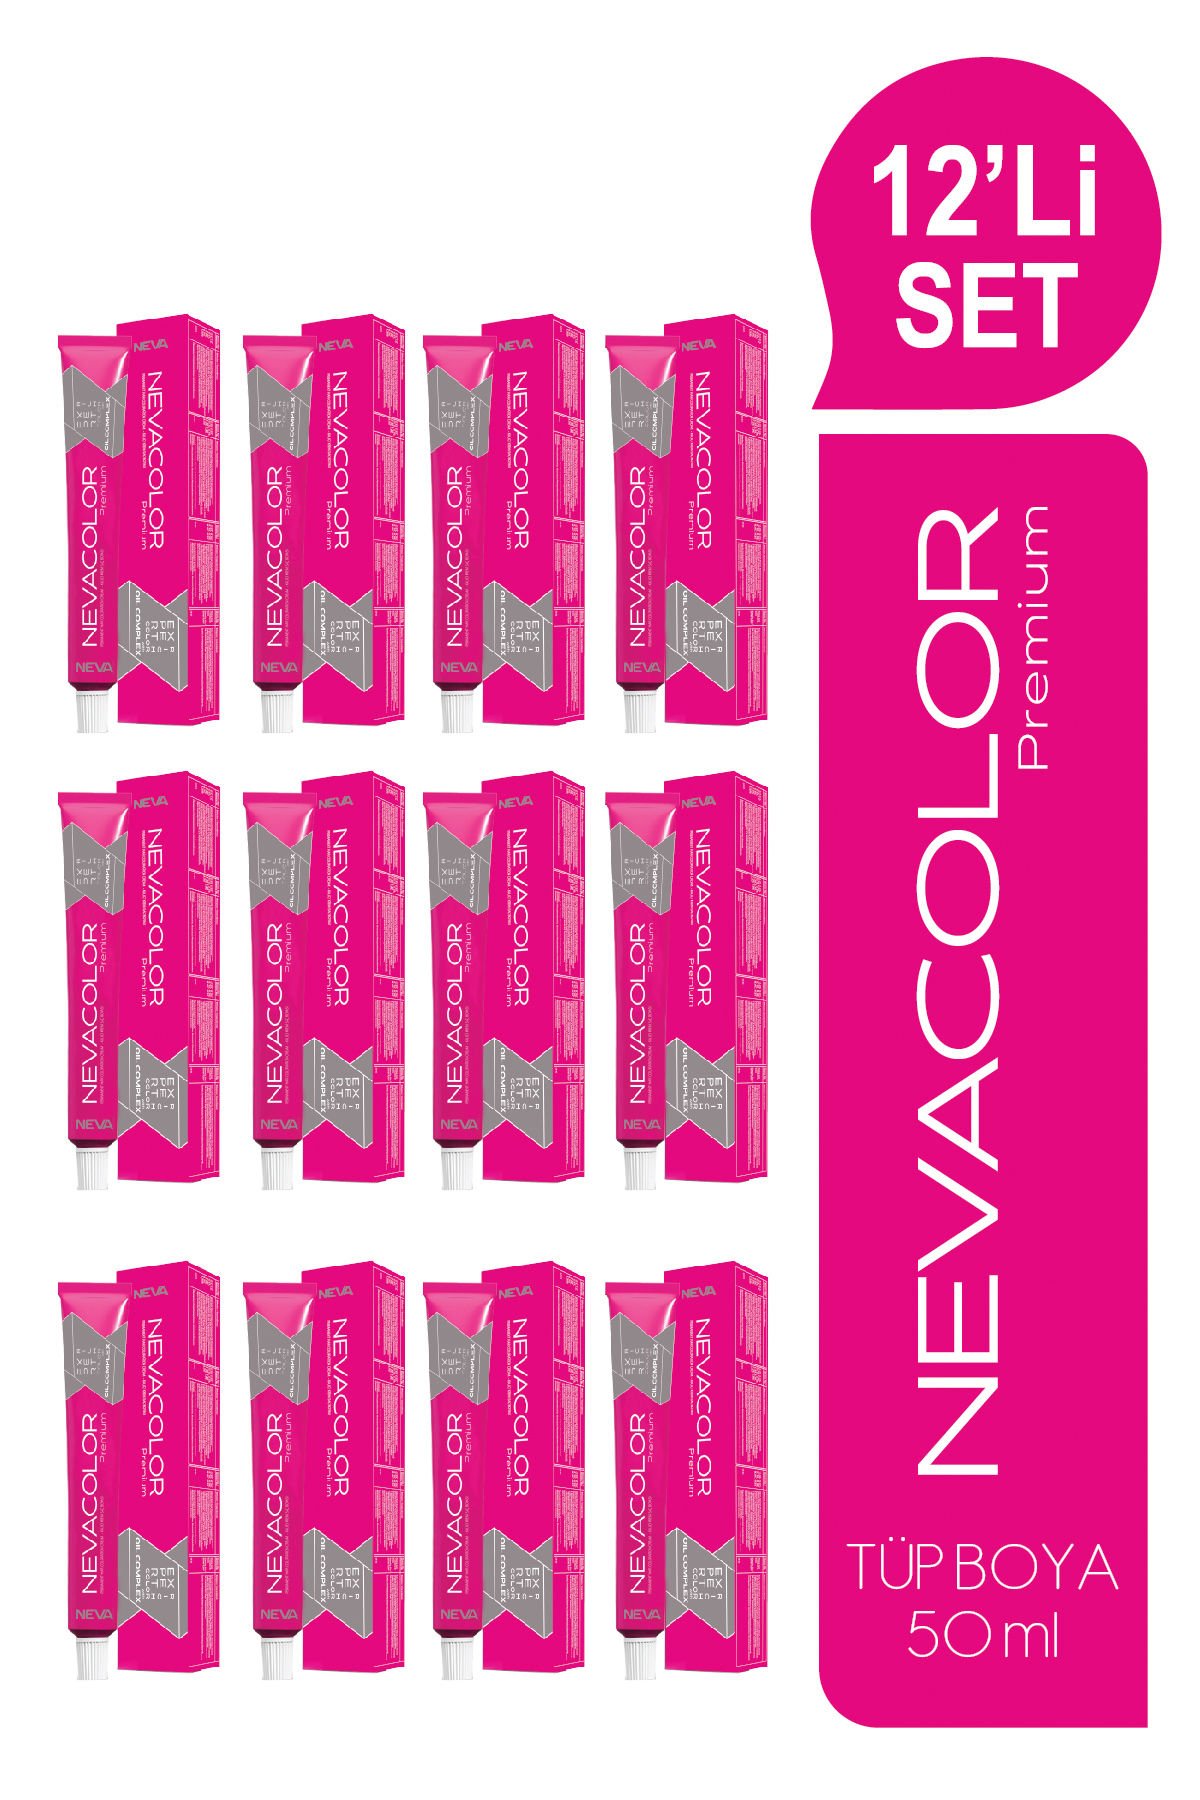 NEVACOLOR Premium 12'Lİ SET  9.1 KÜLLÜ ÇOK AÇIK KUMRAL Kalıcı Krem Saç Boyası (50ml x 12 adet)